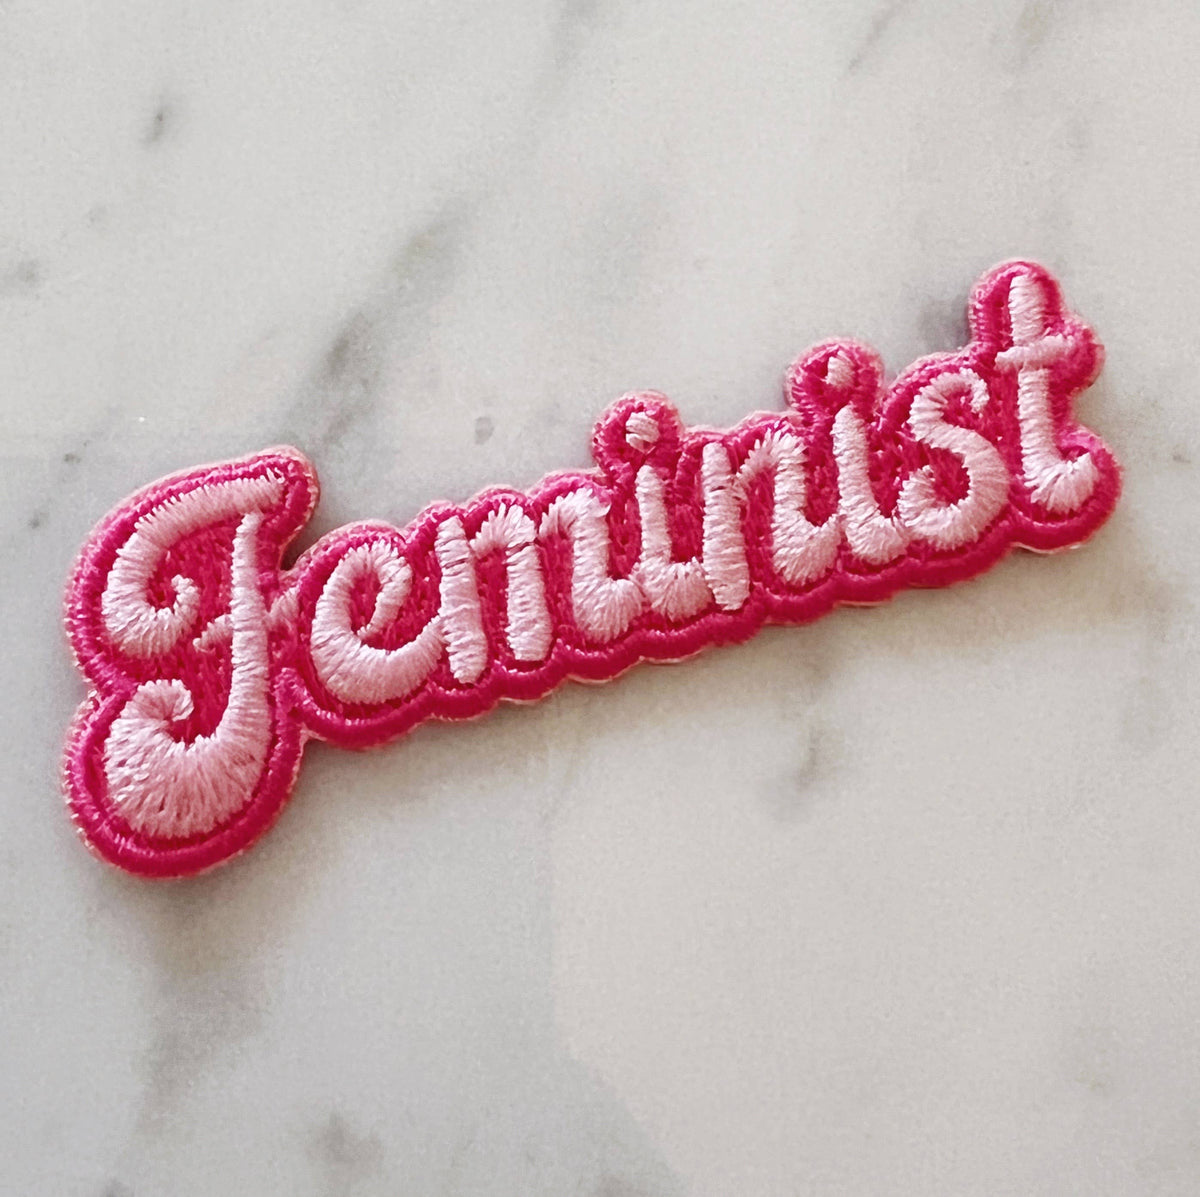 Feminist Pro Choice Patch